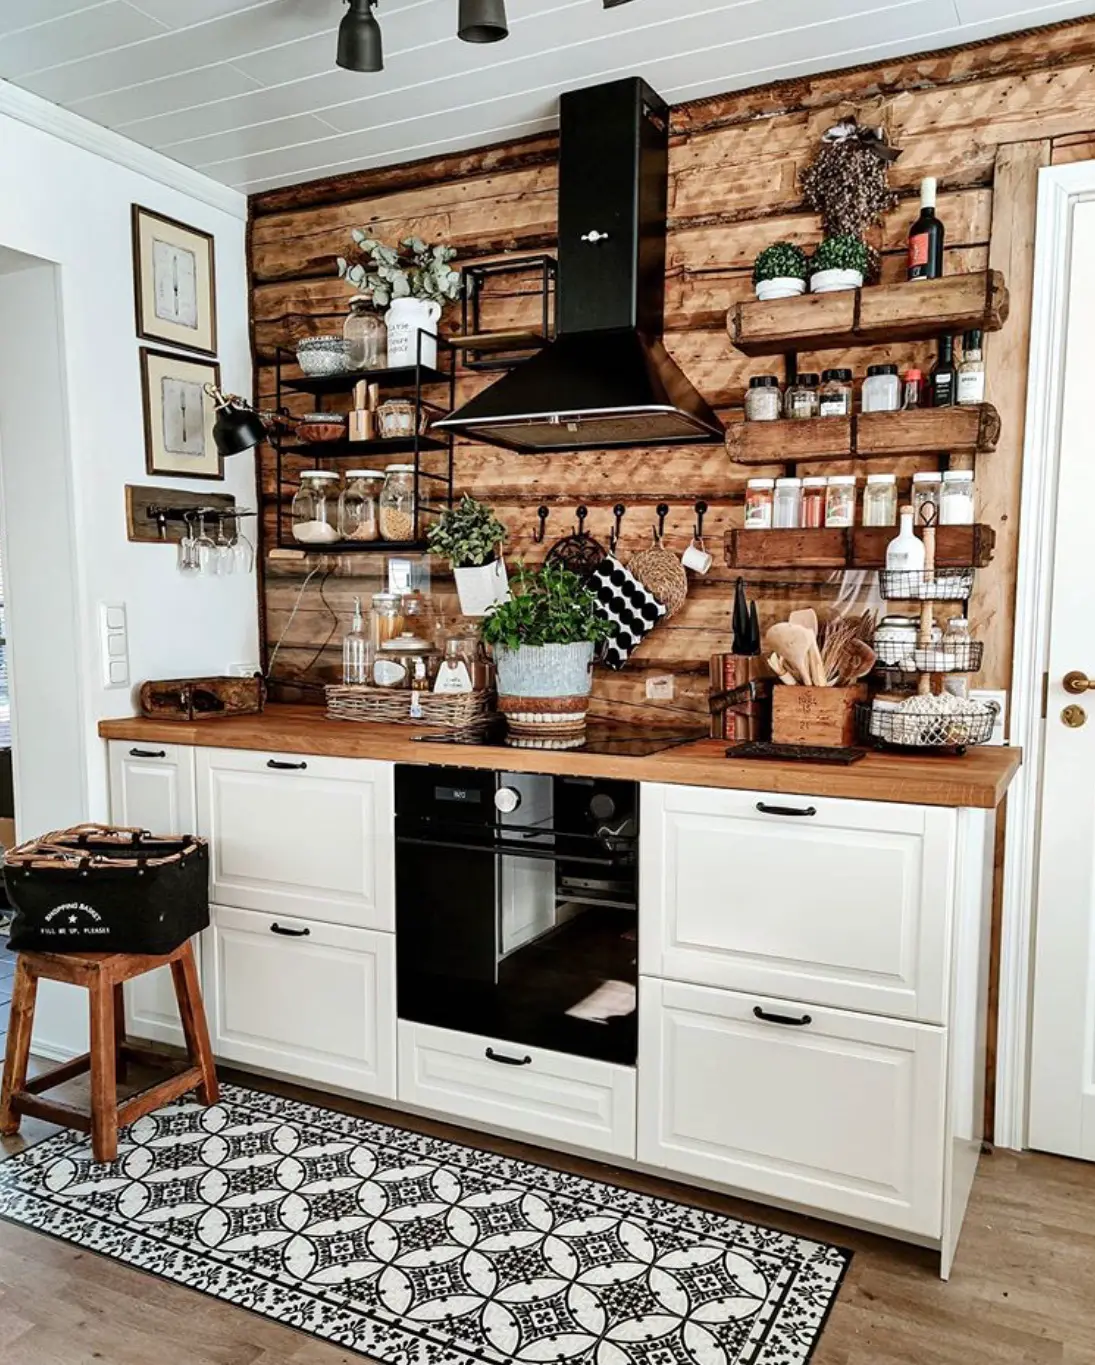 20+ Beautiful Rustic Kitchen Decor Ideas   The Wonder Cottage